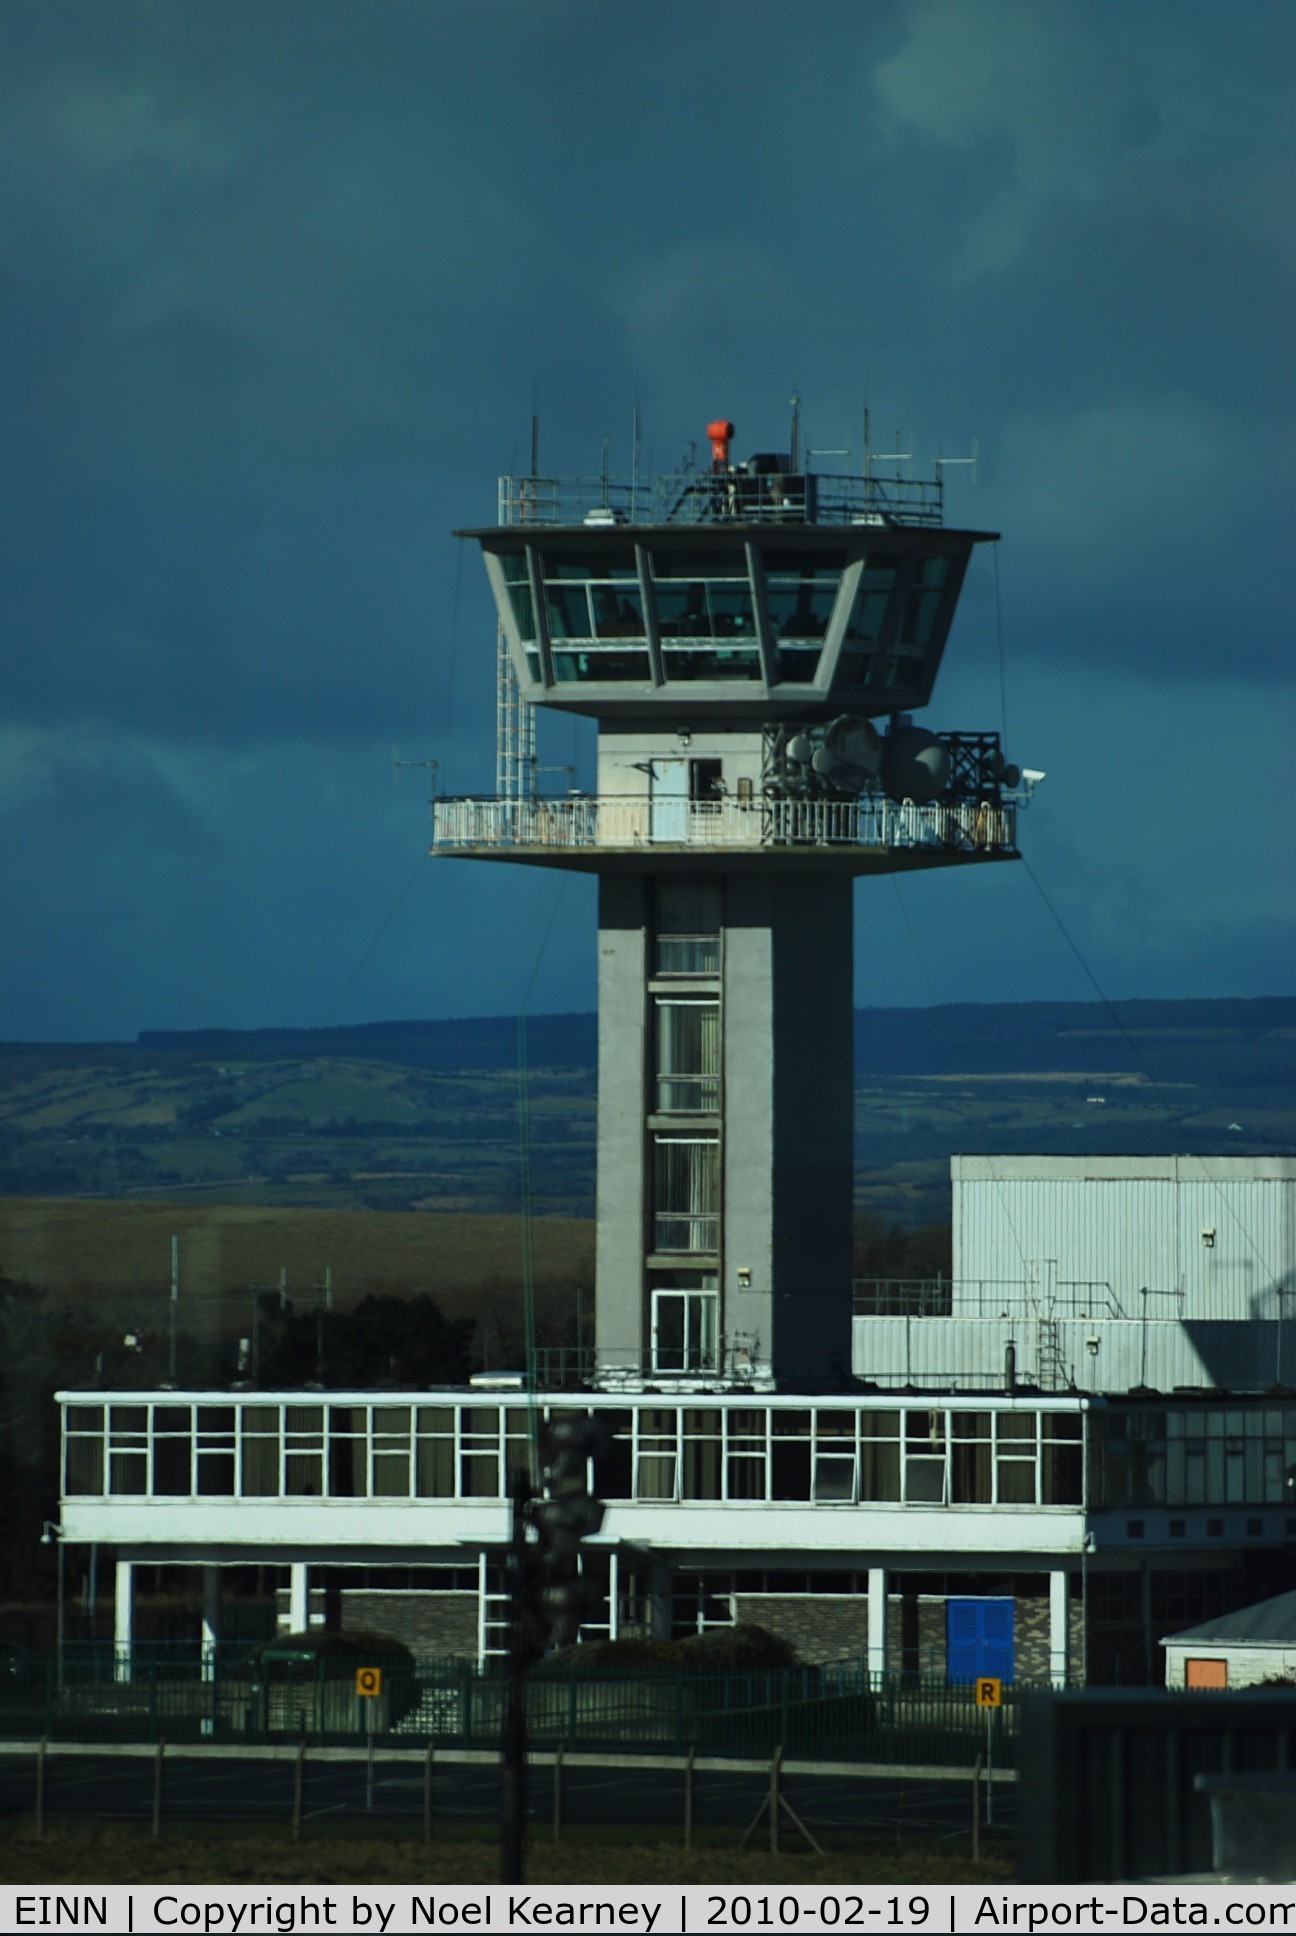 Shannon Airport, Shannon, County Clare Ireland (EINN) - Shannon Tower